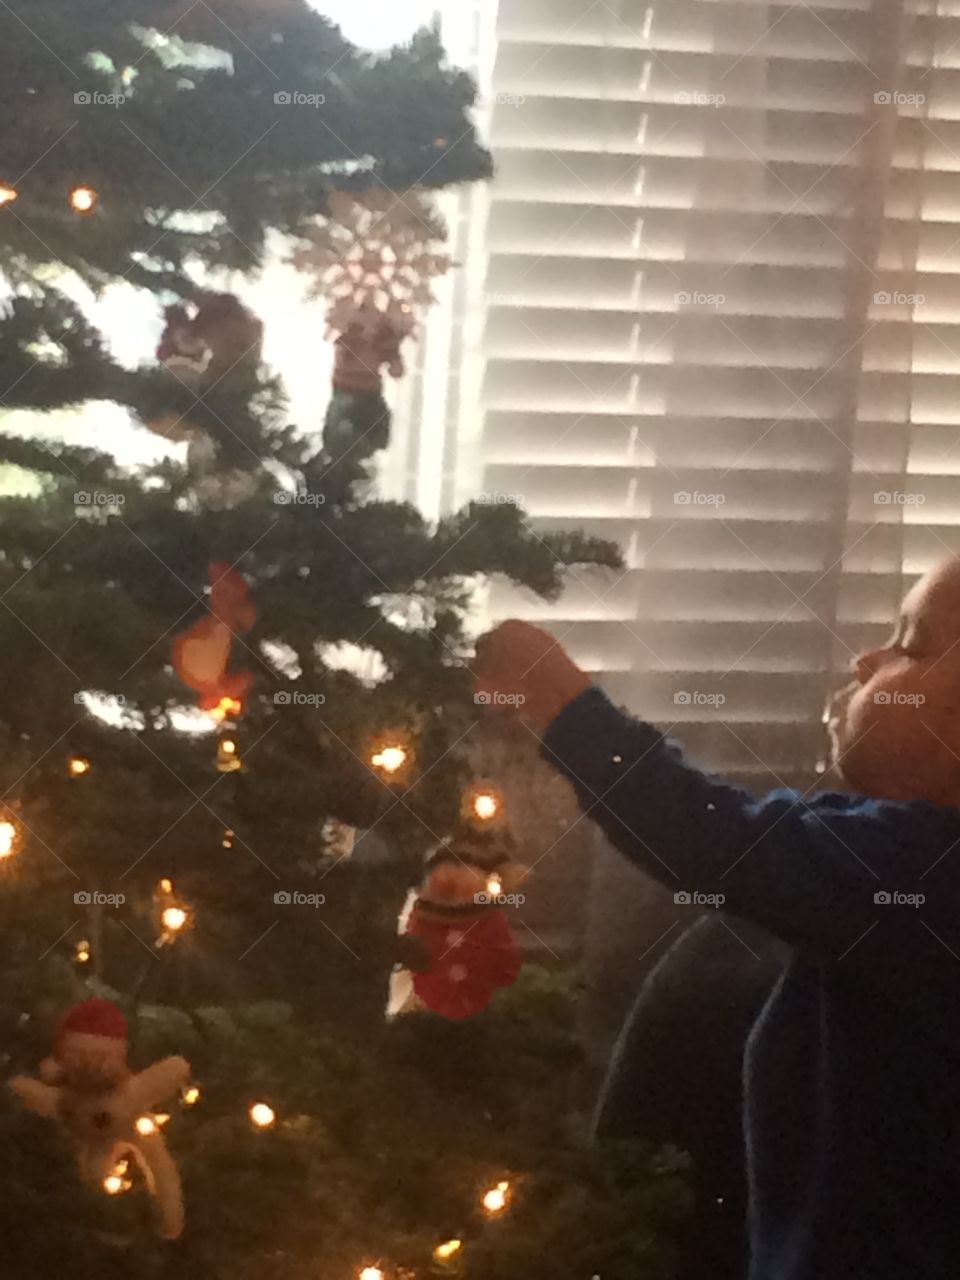 Child and Christmas tree